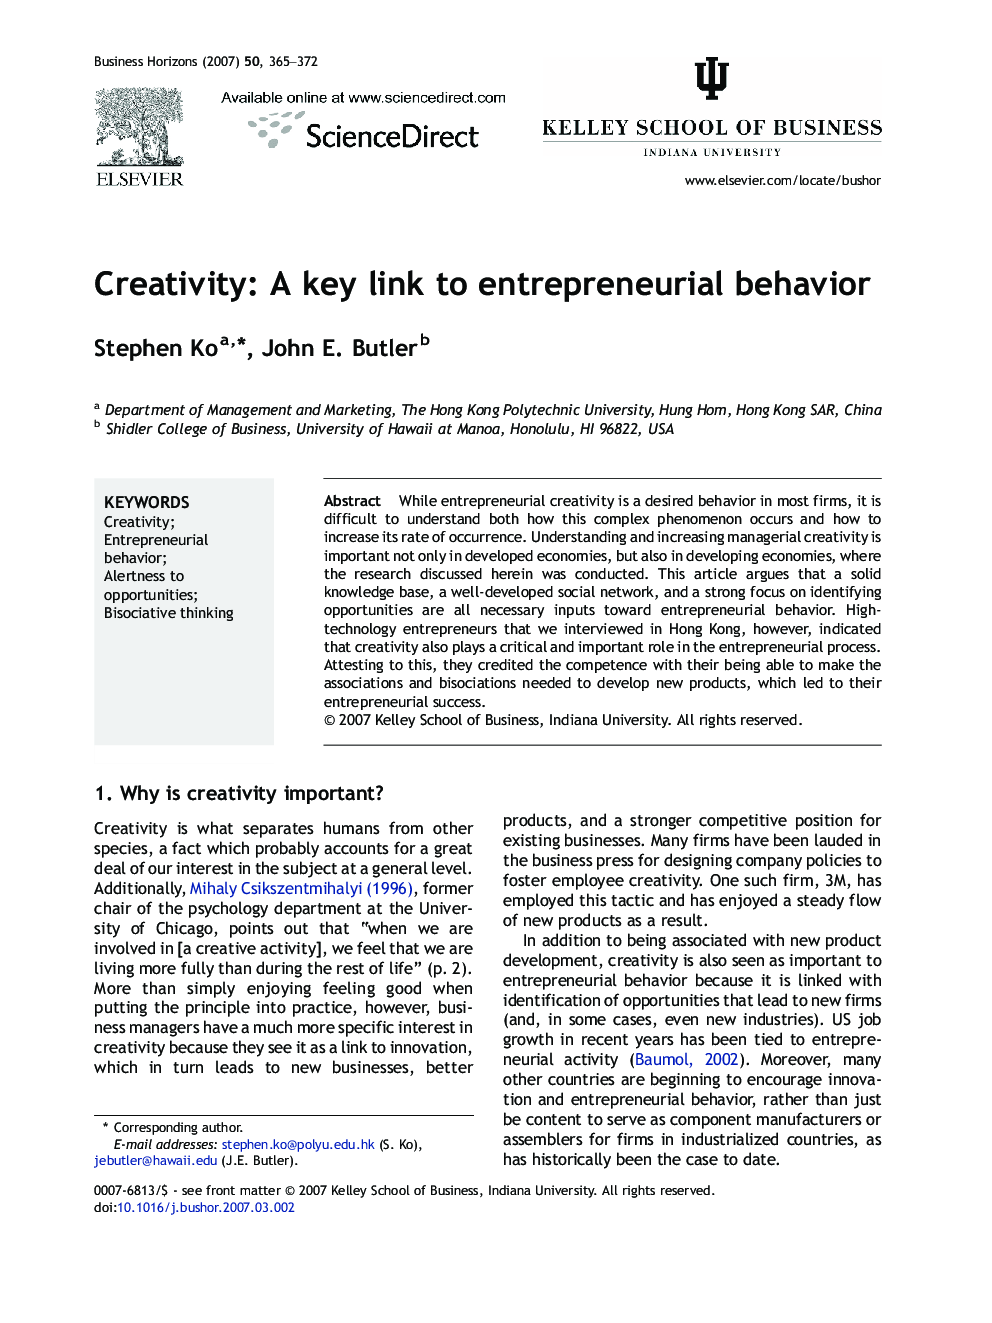 Creativity: A key link to entrepreneurial behavior